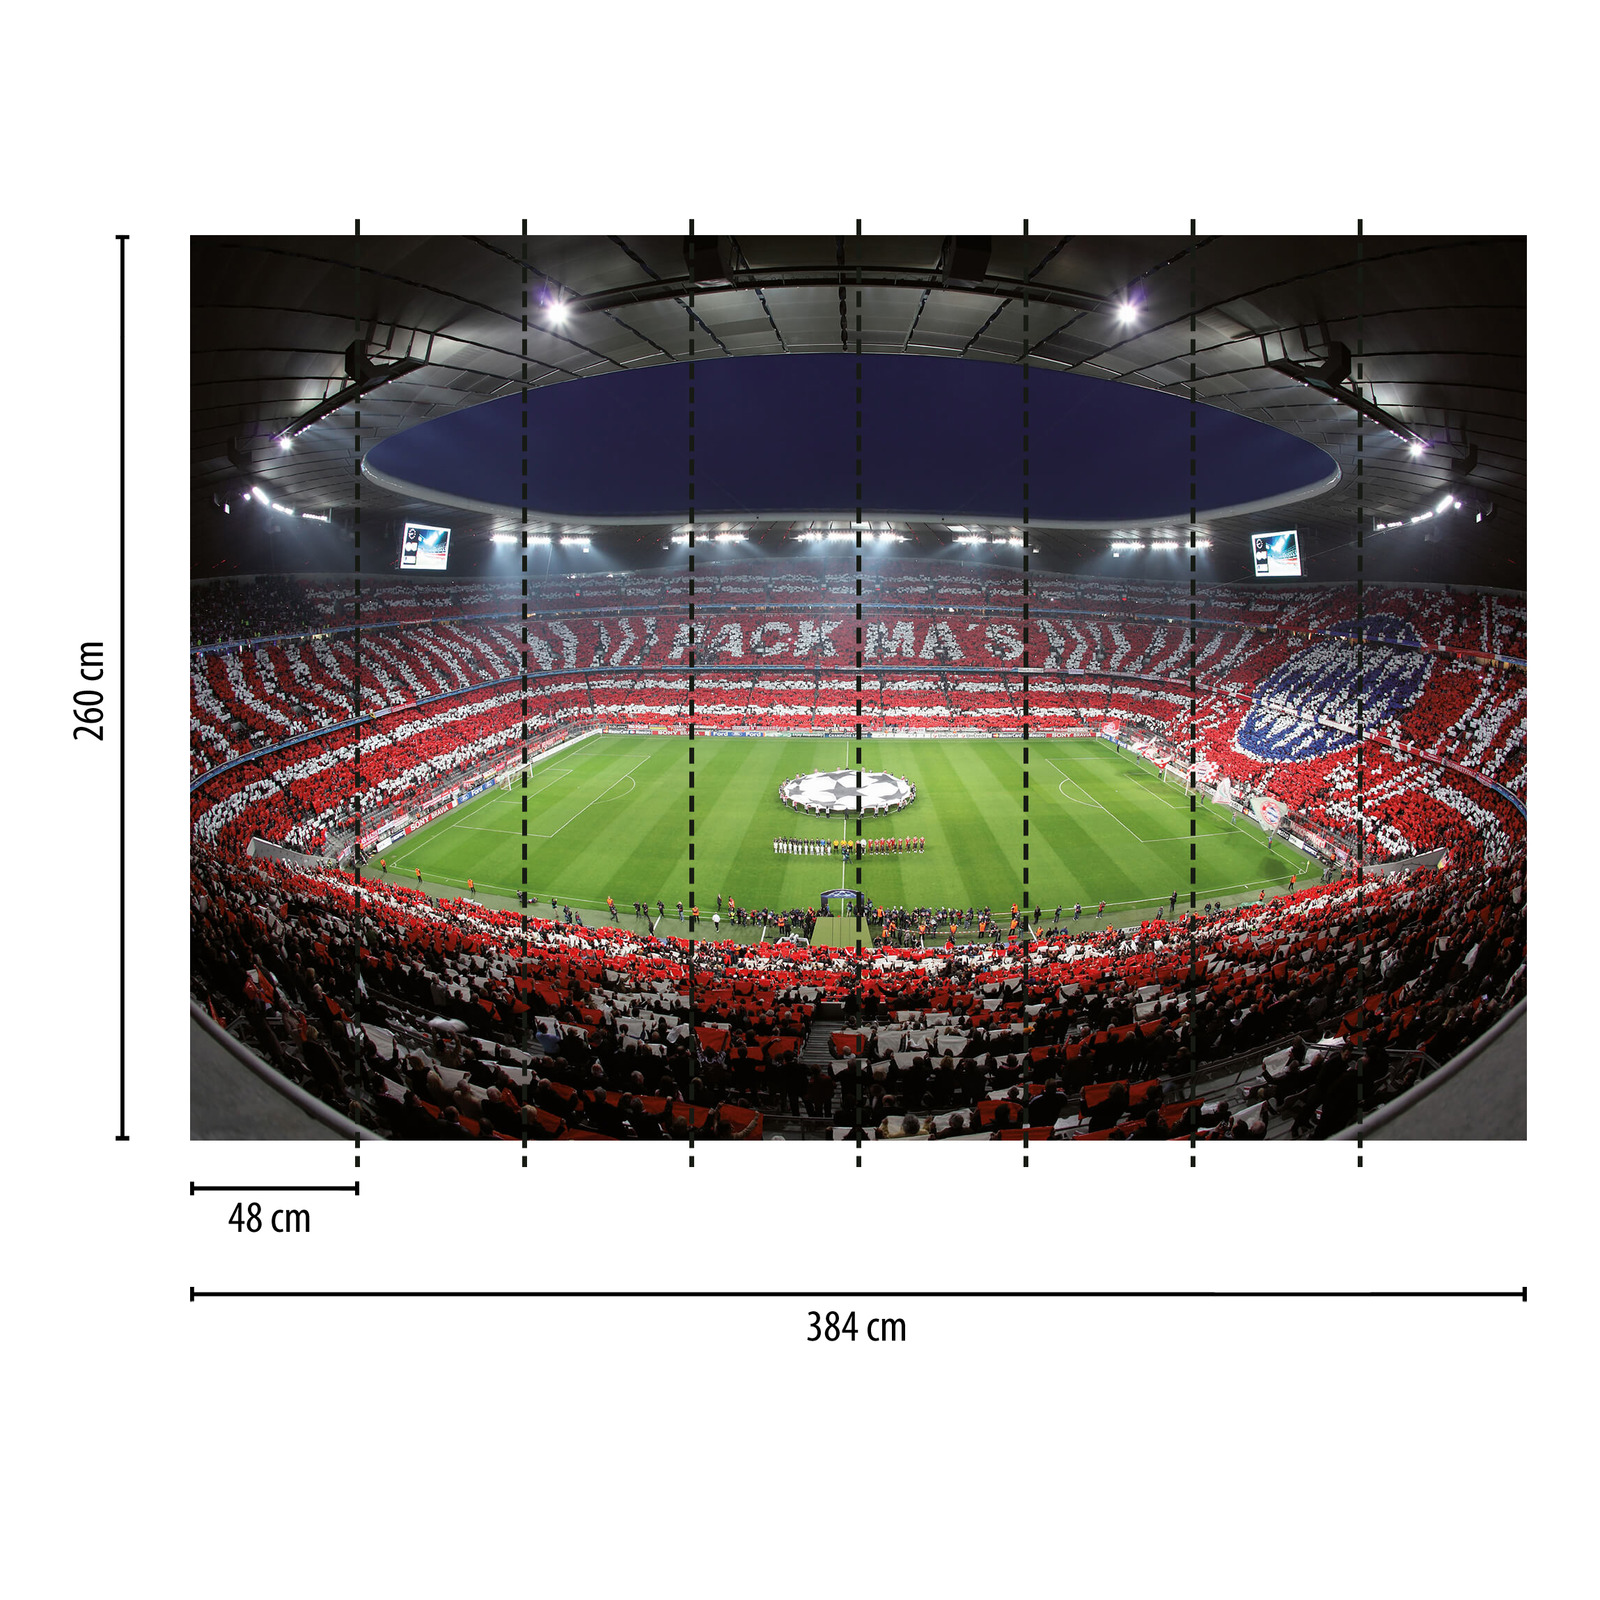             Papier peint panoramique FC Bayern Stadium & Fan Choreographie
        